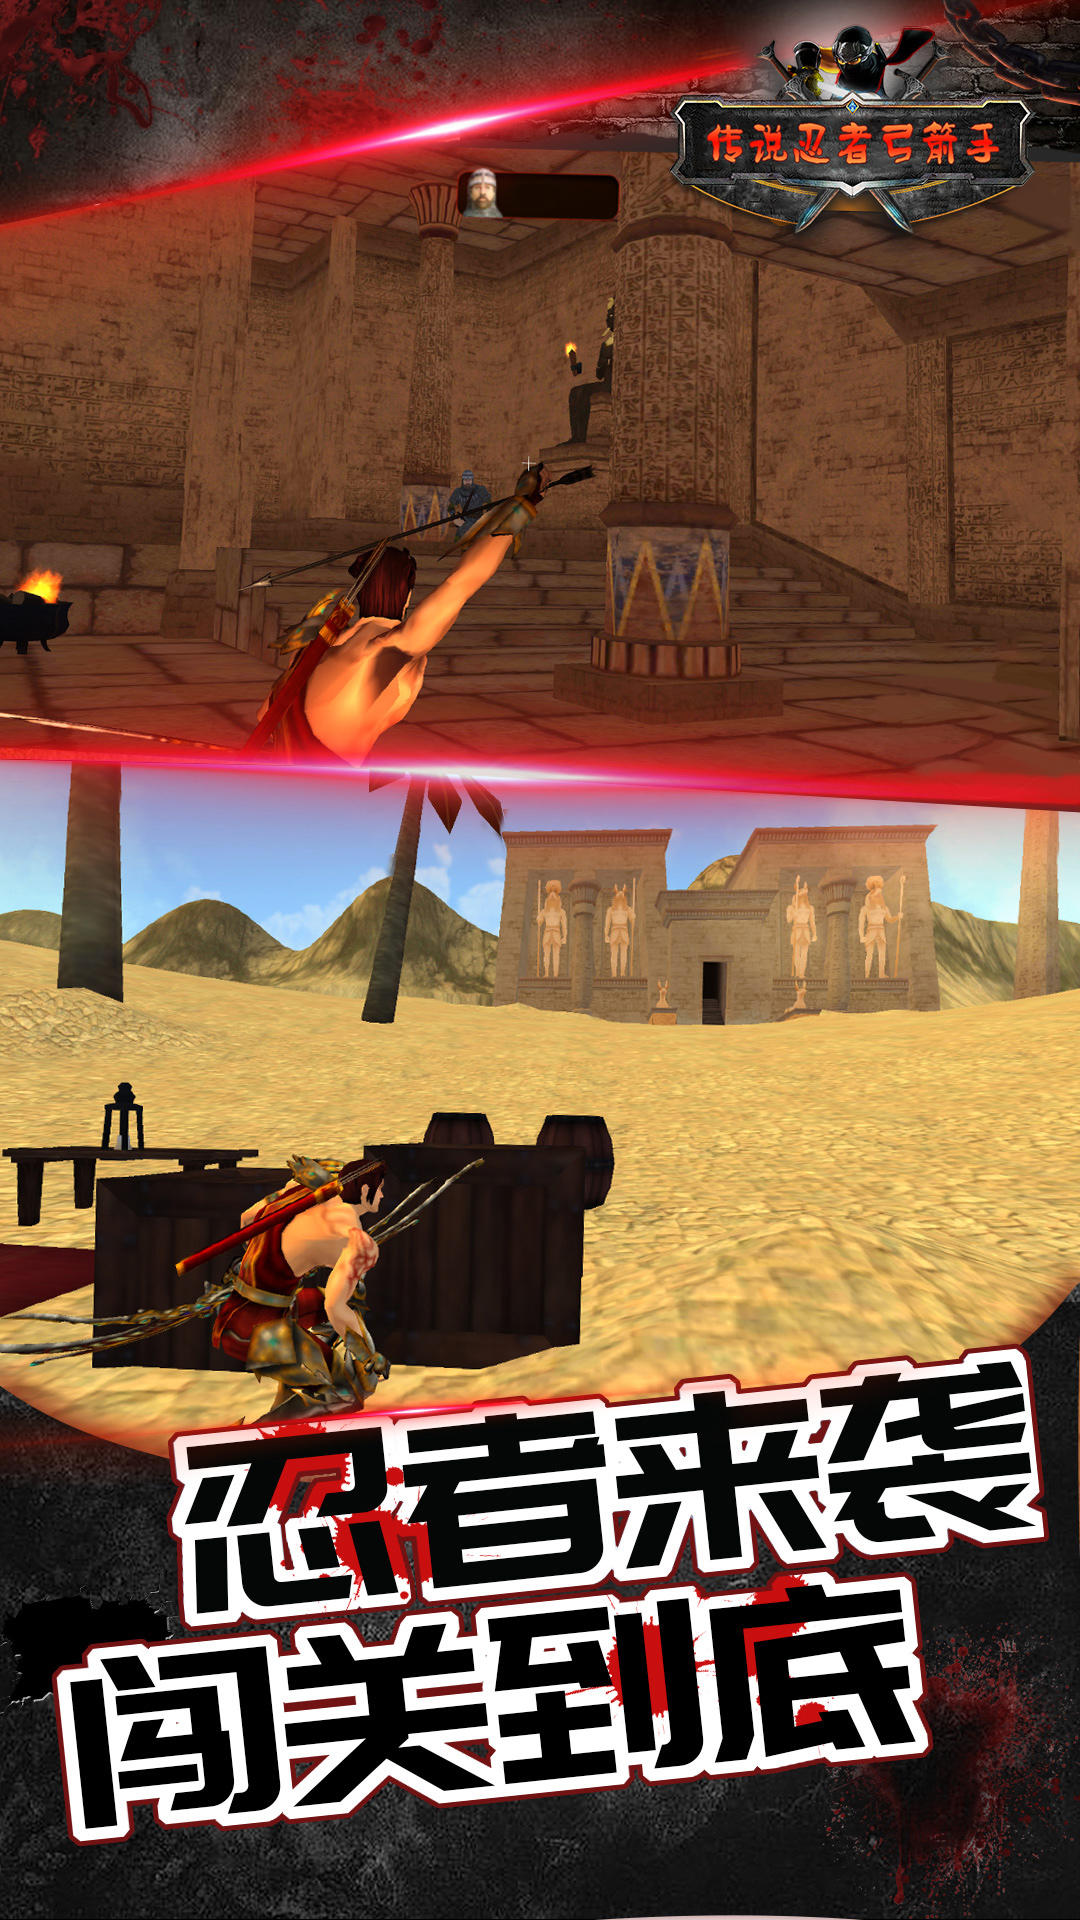 Screenshot 1 of Leggenda Ninja Arciere 1.0.0